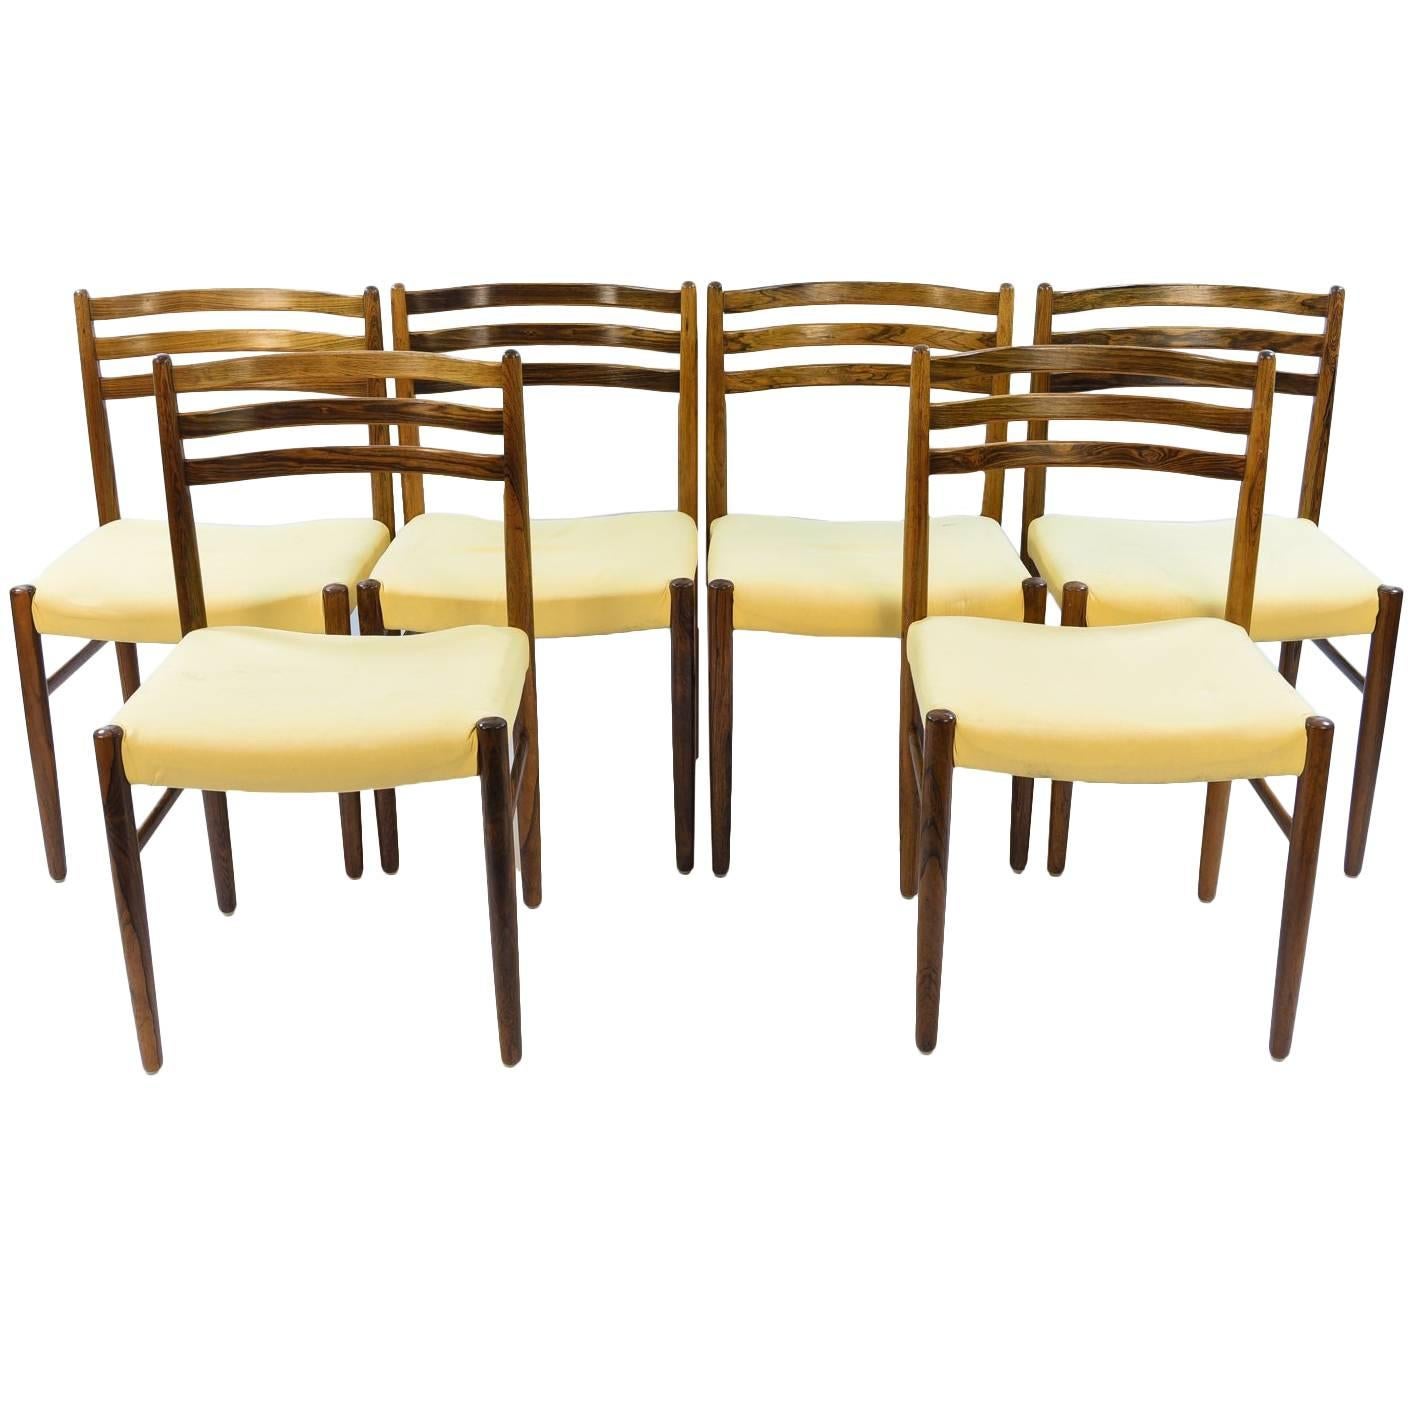 Six Danish Midcentury Rosewood Dining Chairs